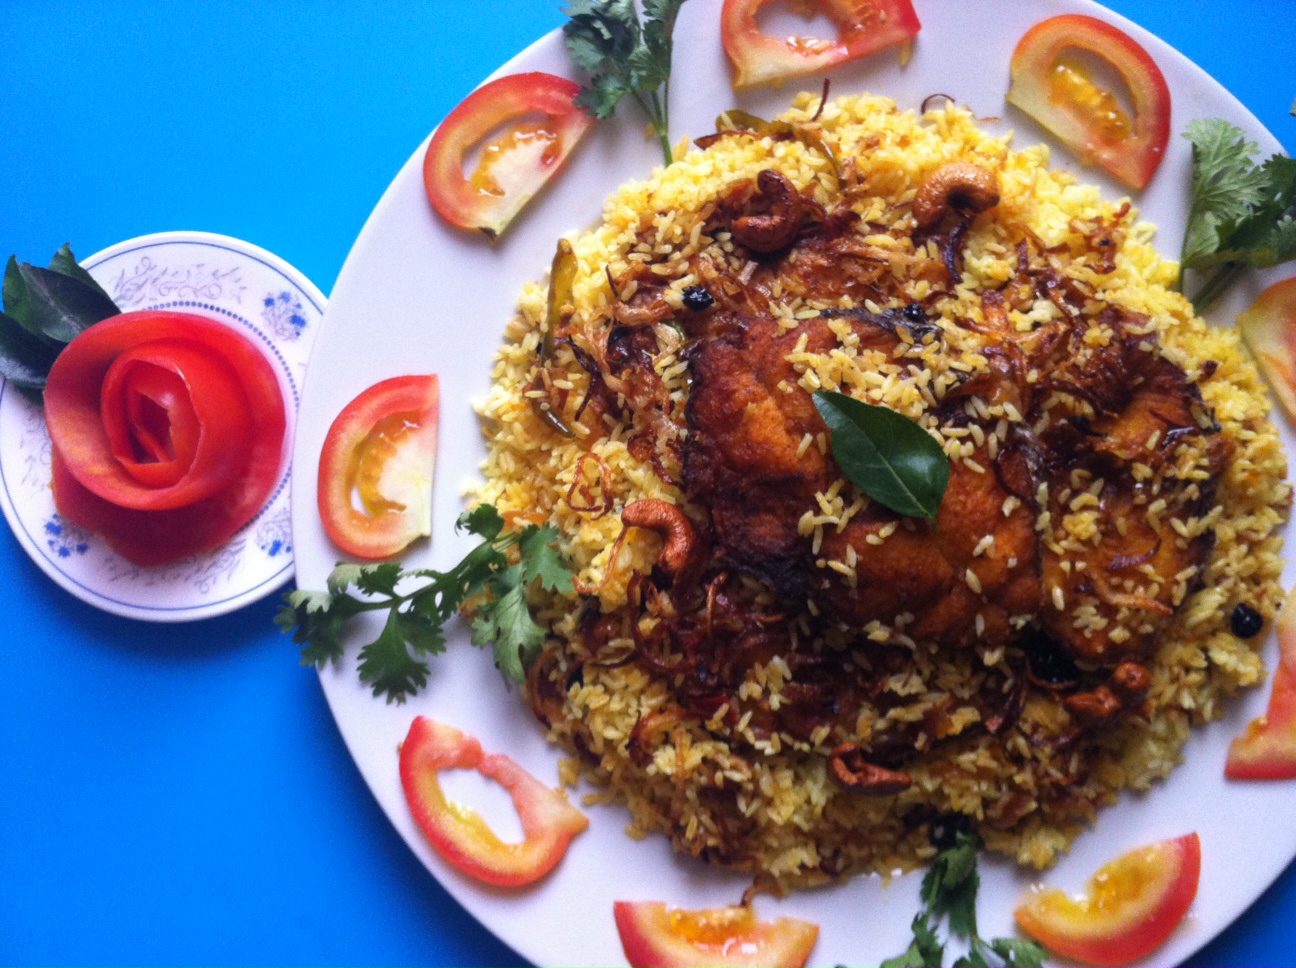 Kerala Recipes with photos - DineTable.com Indian Kerala food cooking ...